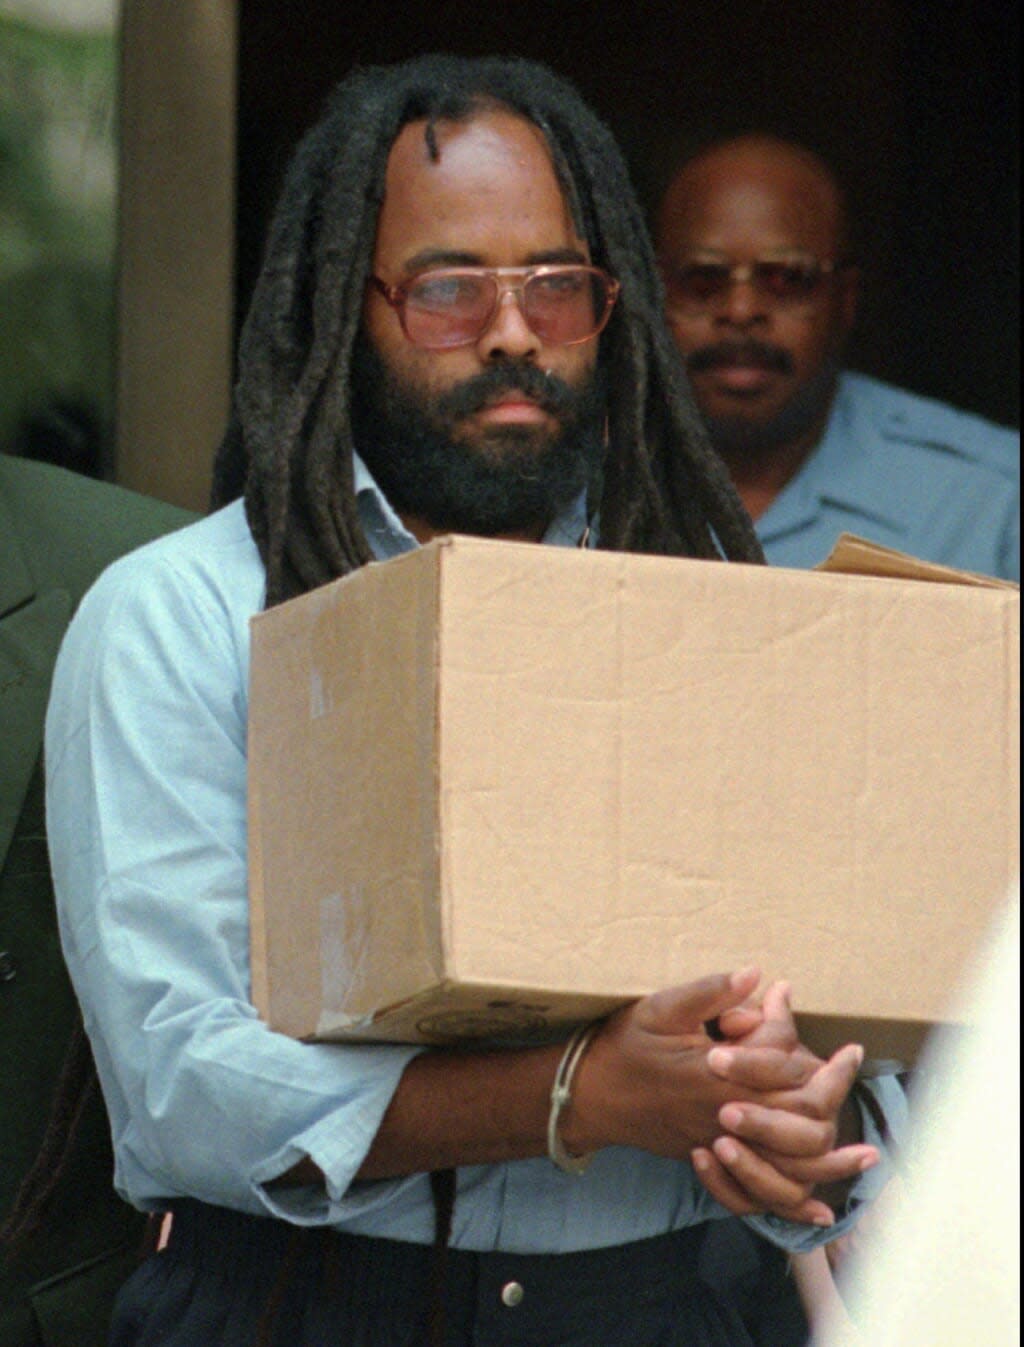 Mumia Abu-Jamal leaves Philadelphia’s City Hall on July 12, 1995 after a hearing in Philadelphia. (AP Photo/Chris Gardner, File)